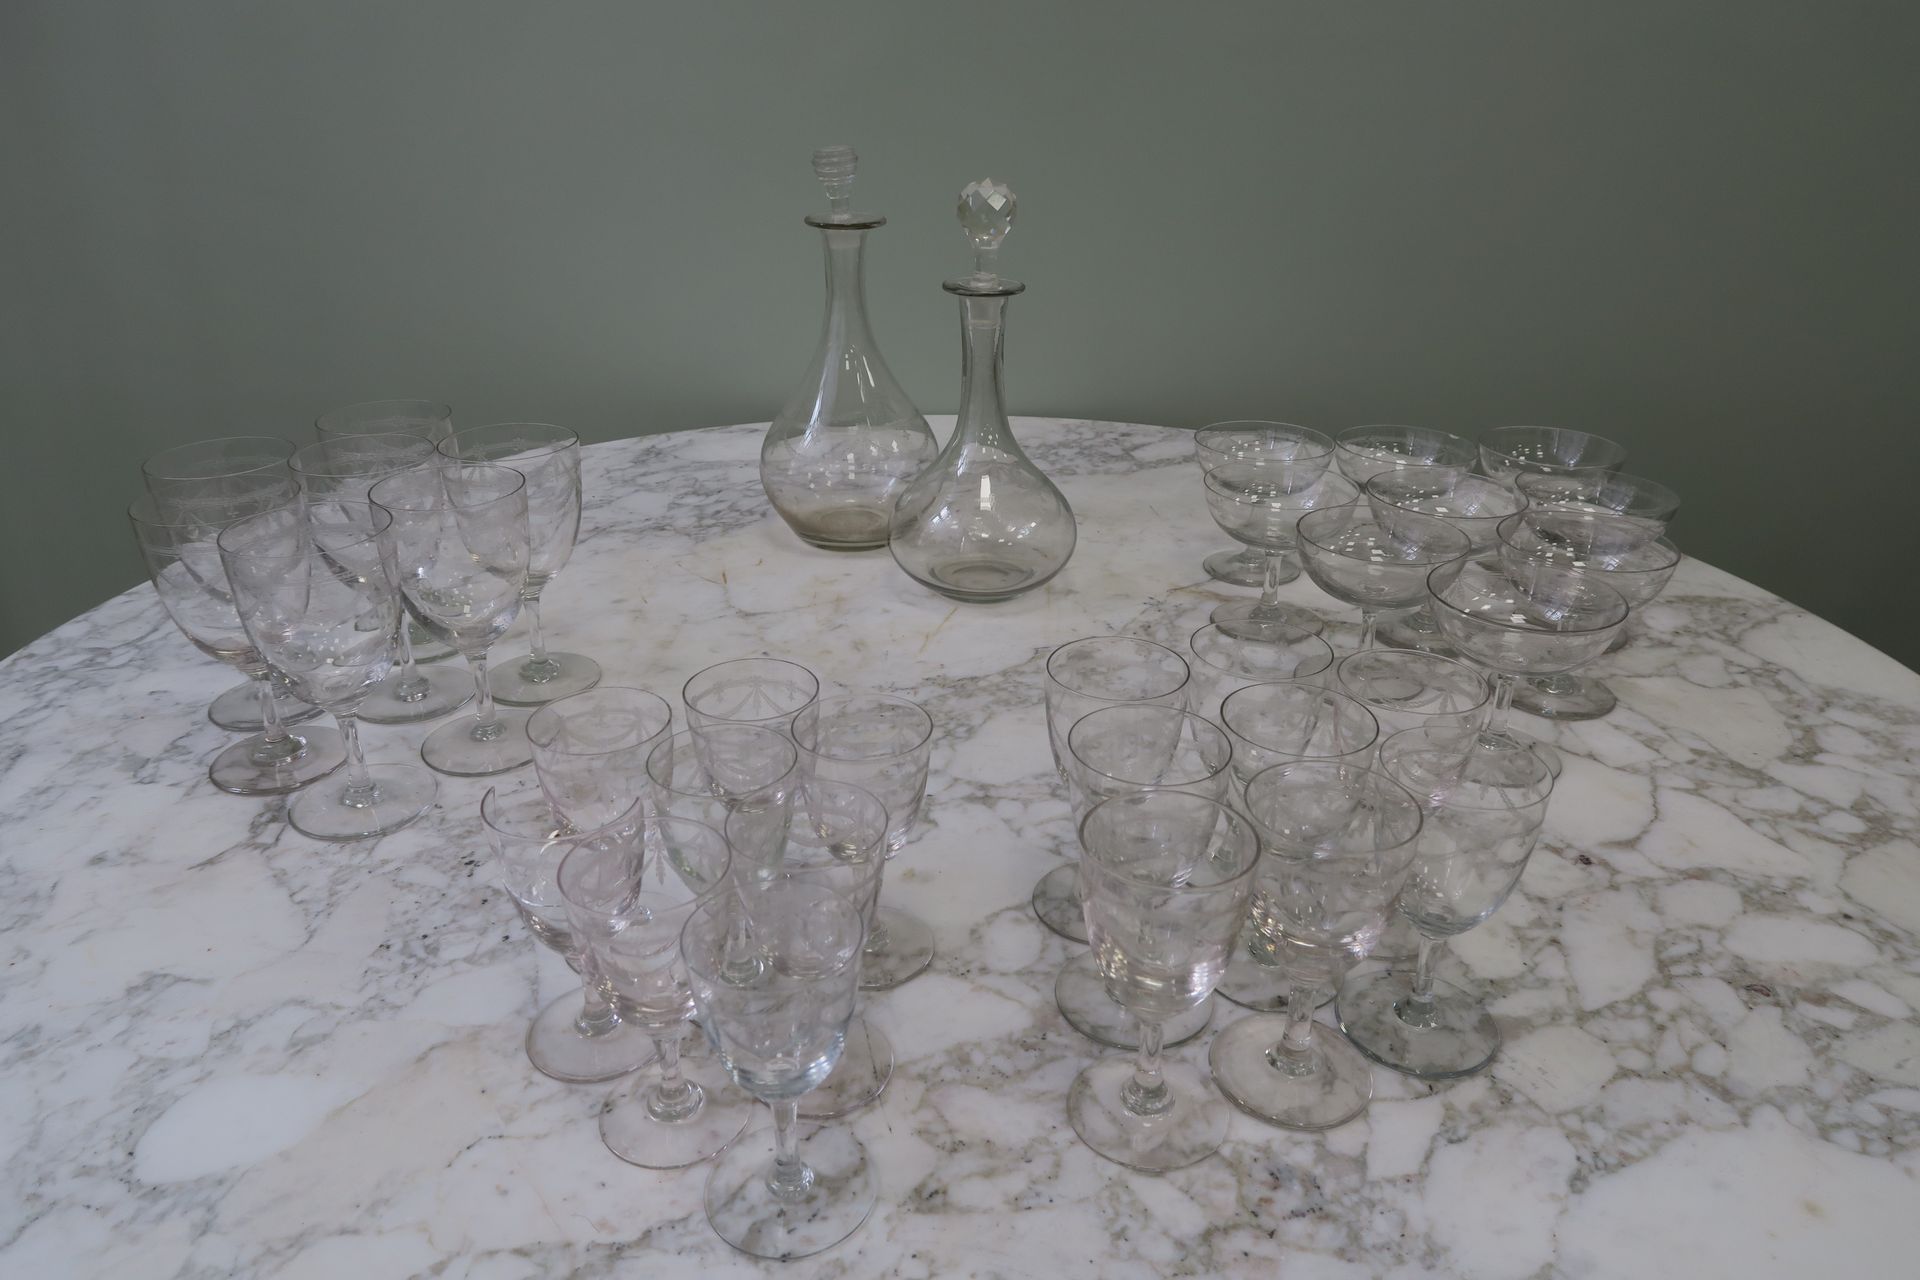 Null 一套雕刻的水晶杯的一部分，包括大约22个杯子和9个香槟杯，以及两个醒酒器

(Chips)